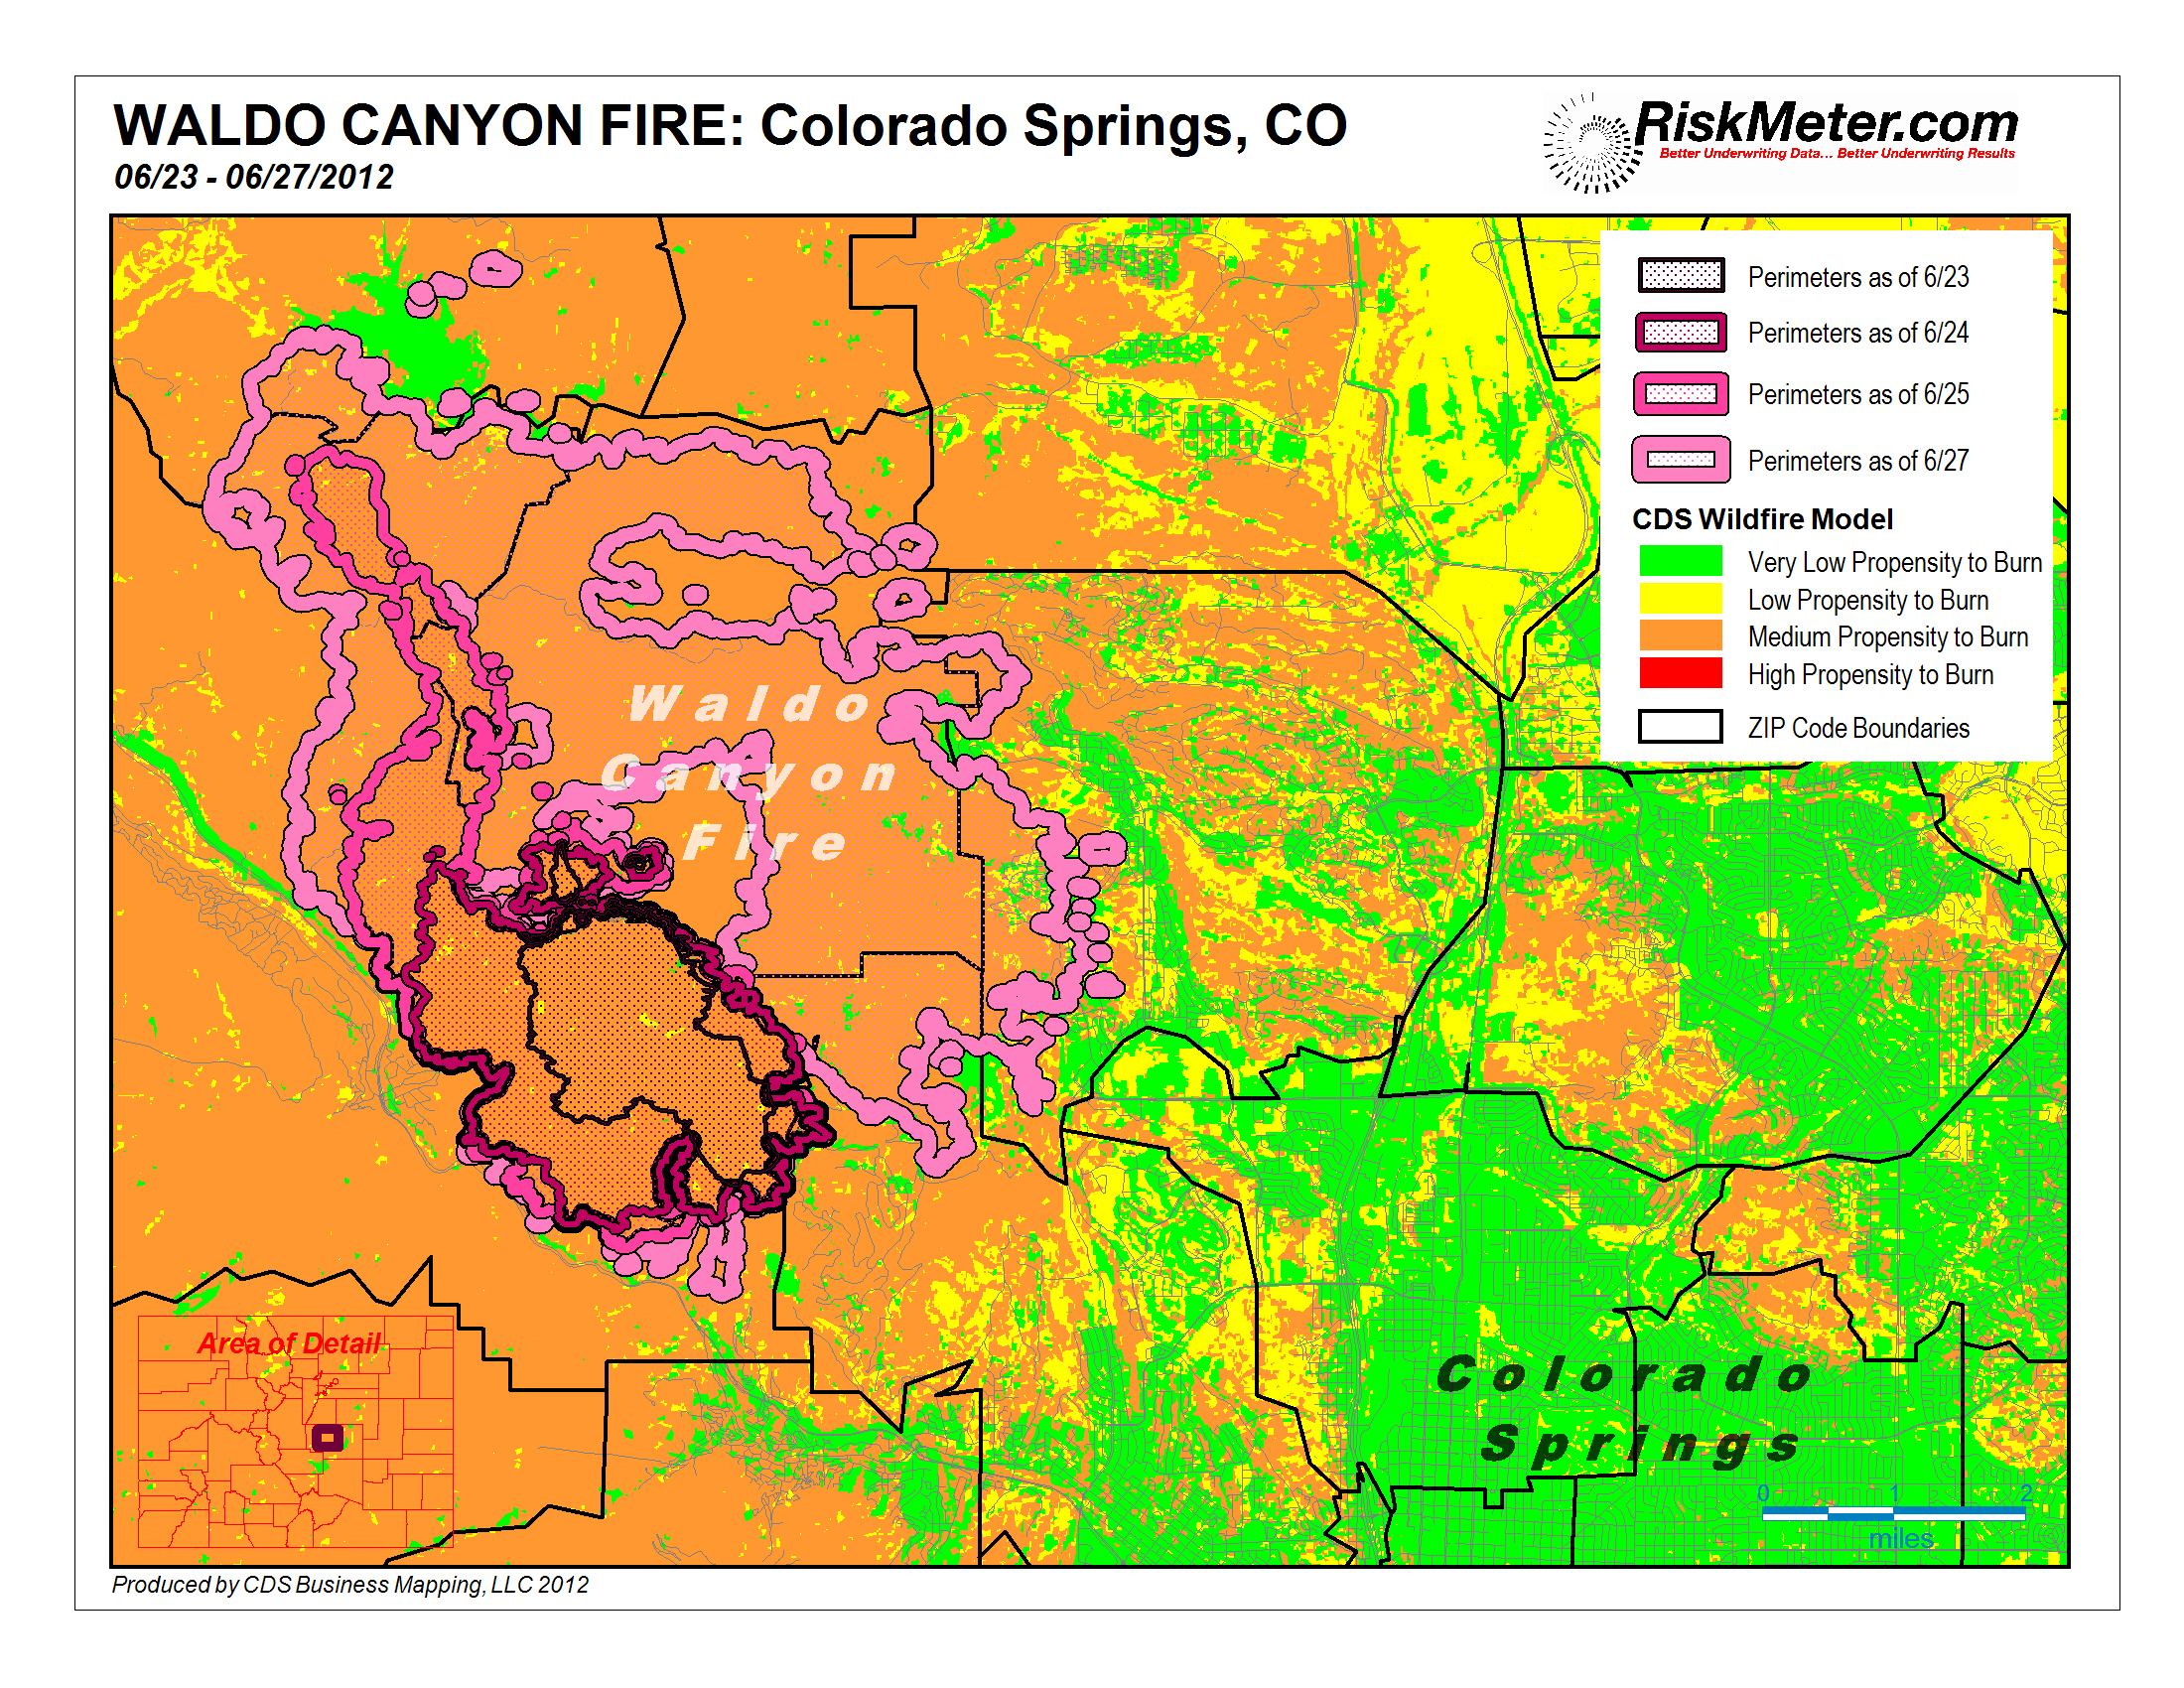 Colorado Fire Threatens Thousands of Residences